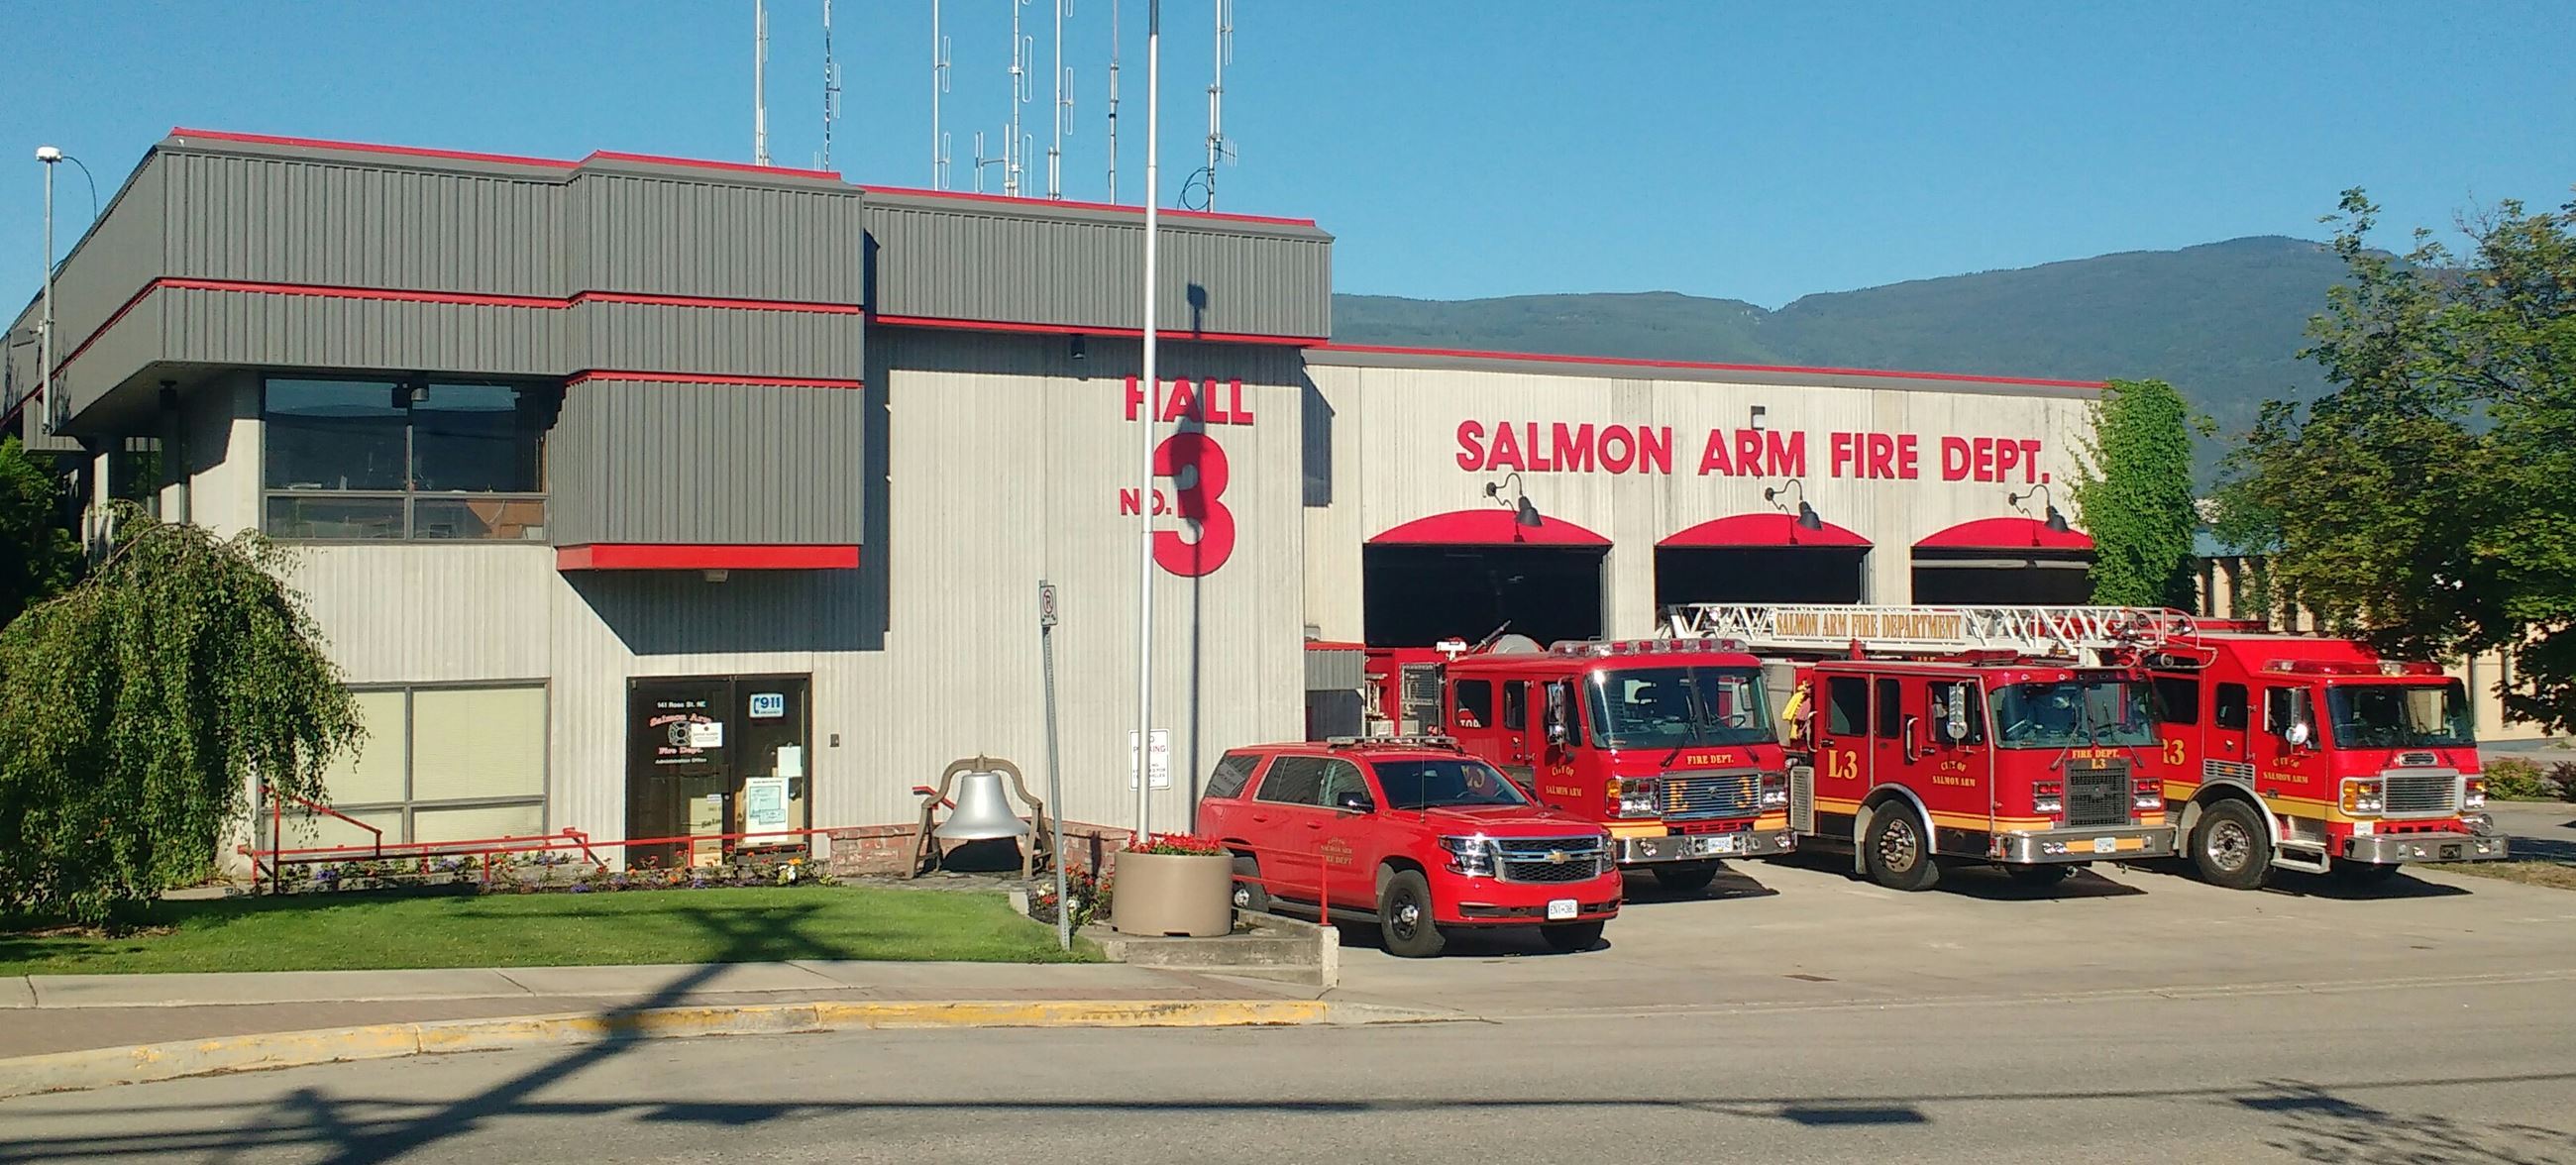 mattress store salmon arm